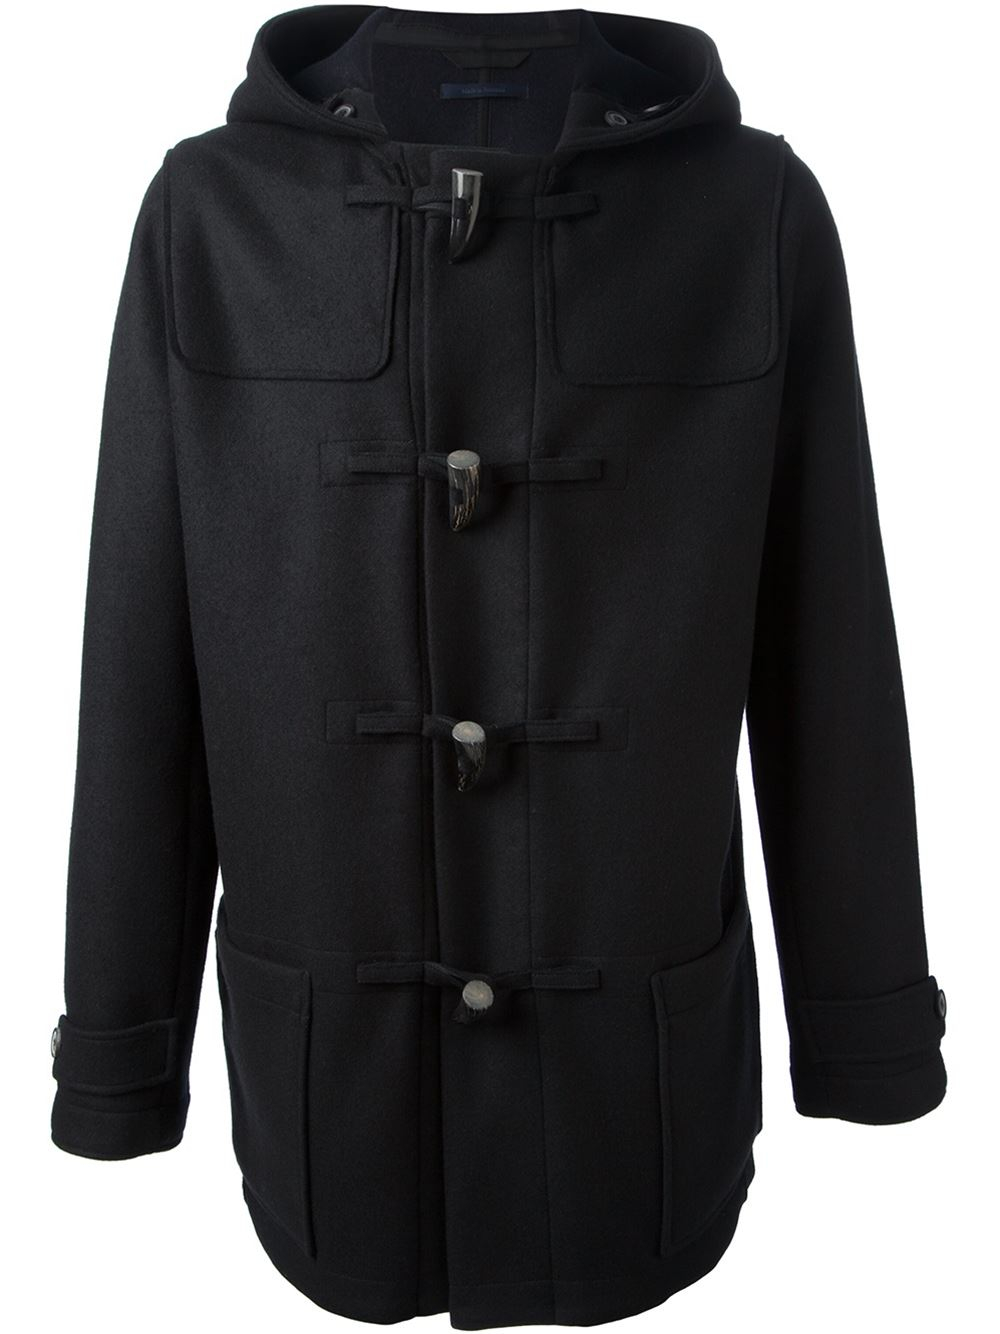 Lyst - Lanvin Toggle Fastening Jacket in Black for Men